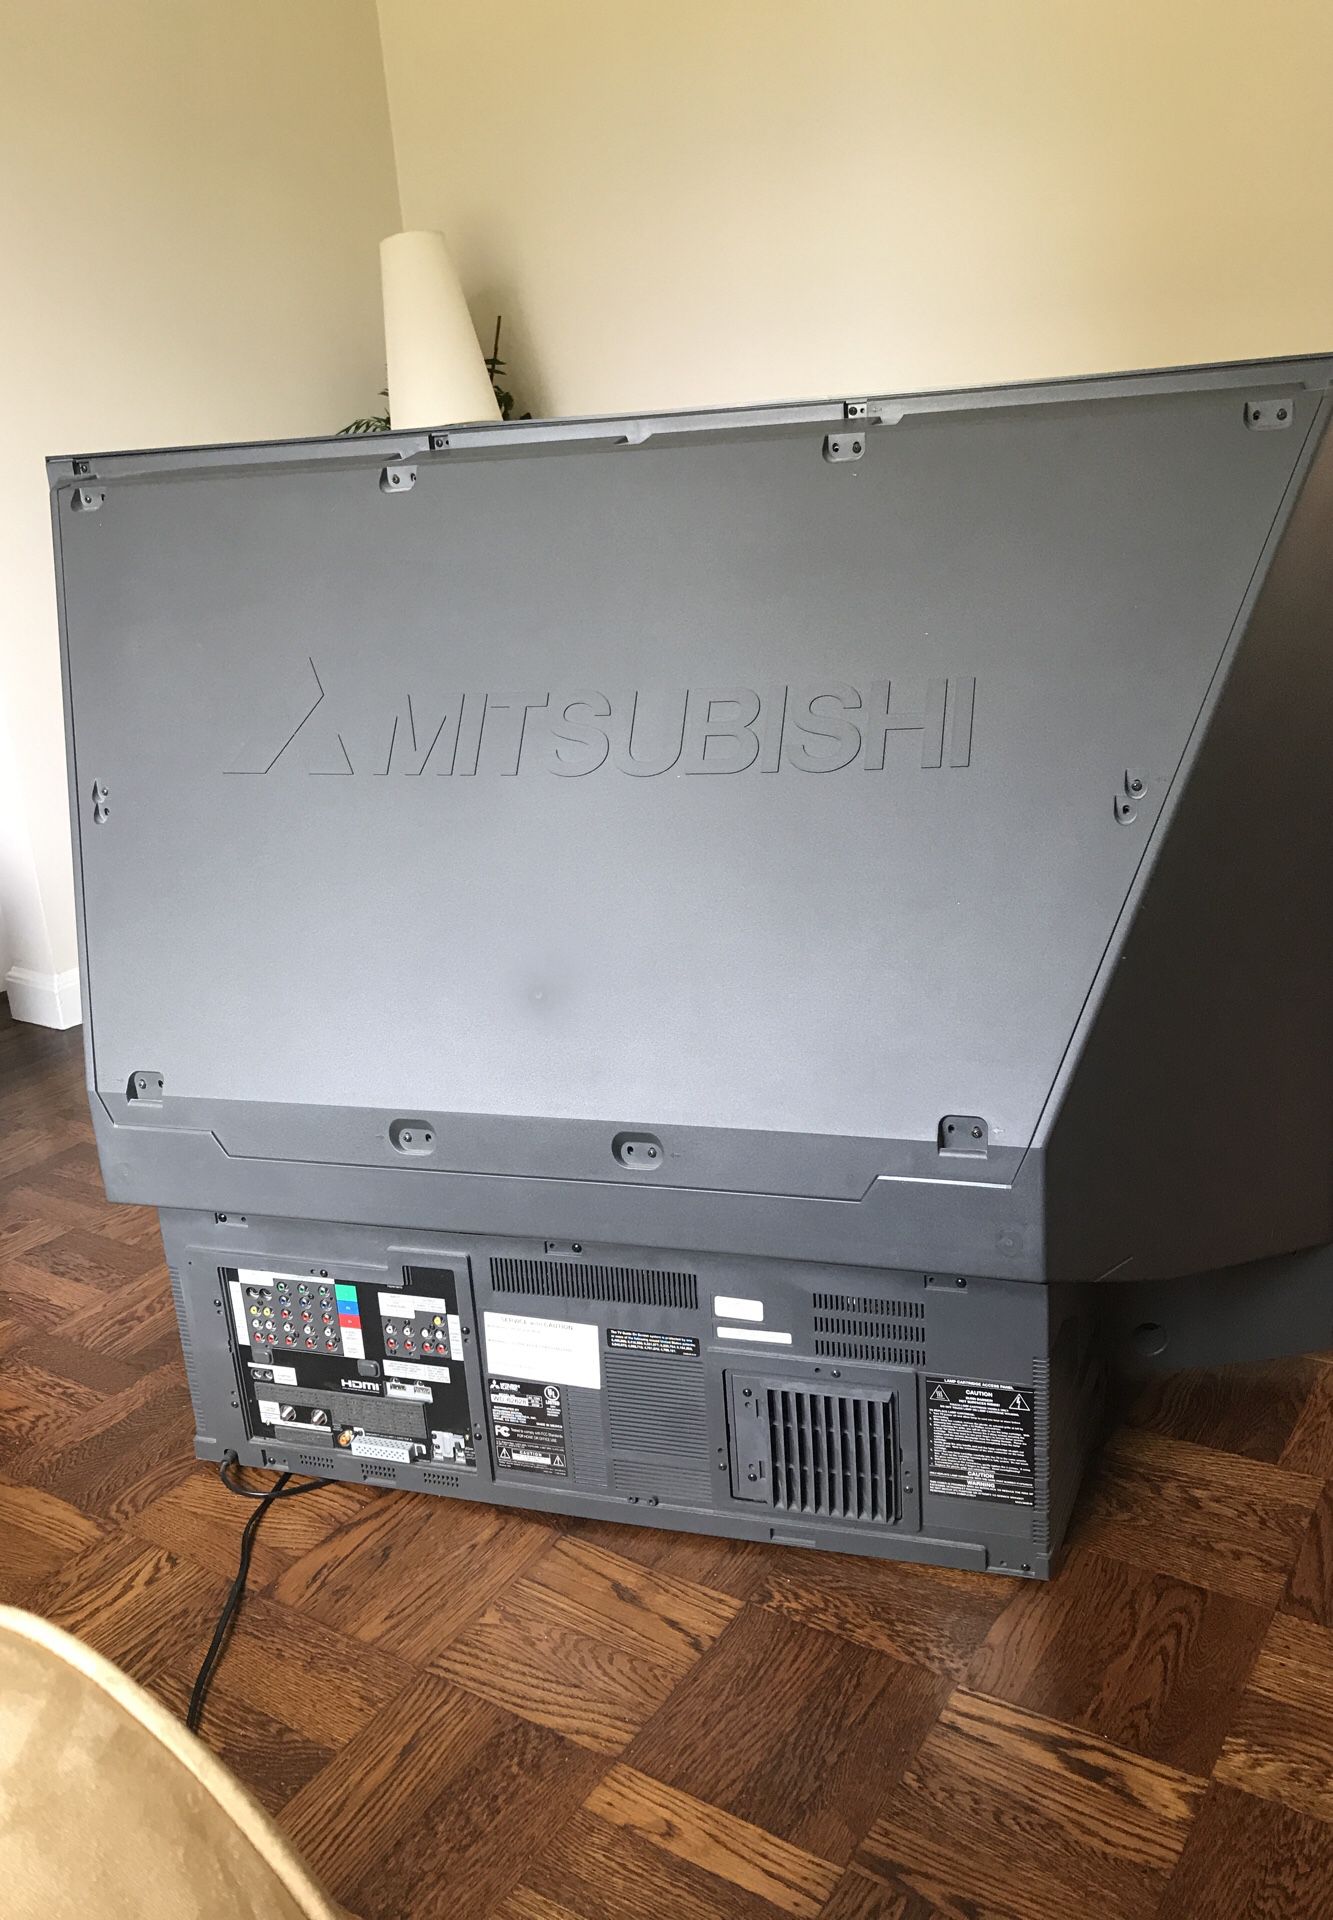 Mitsubishi 62” DLP TV